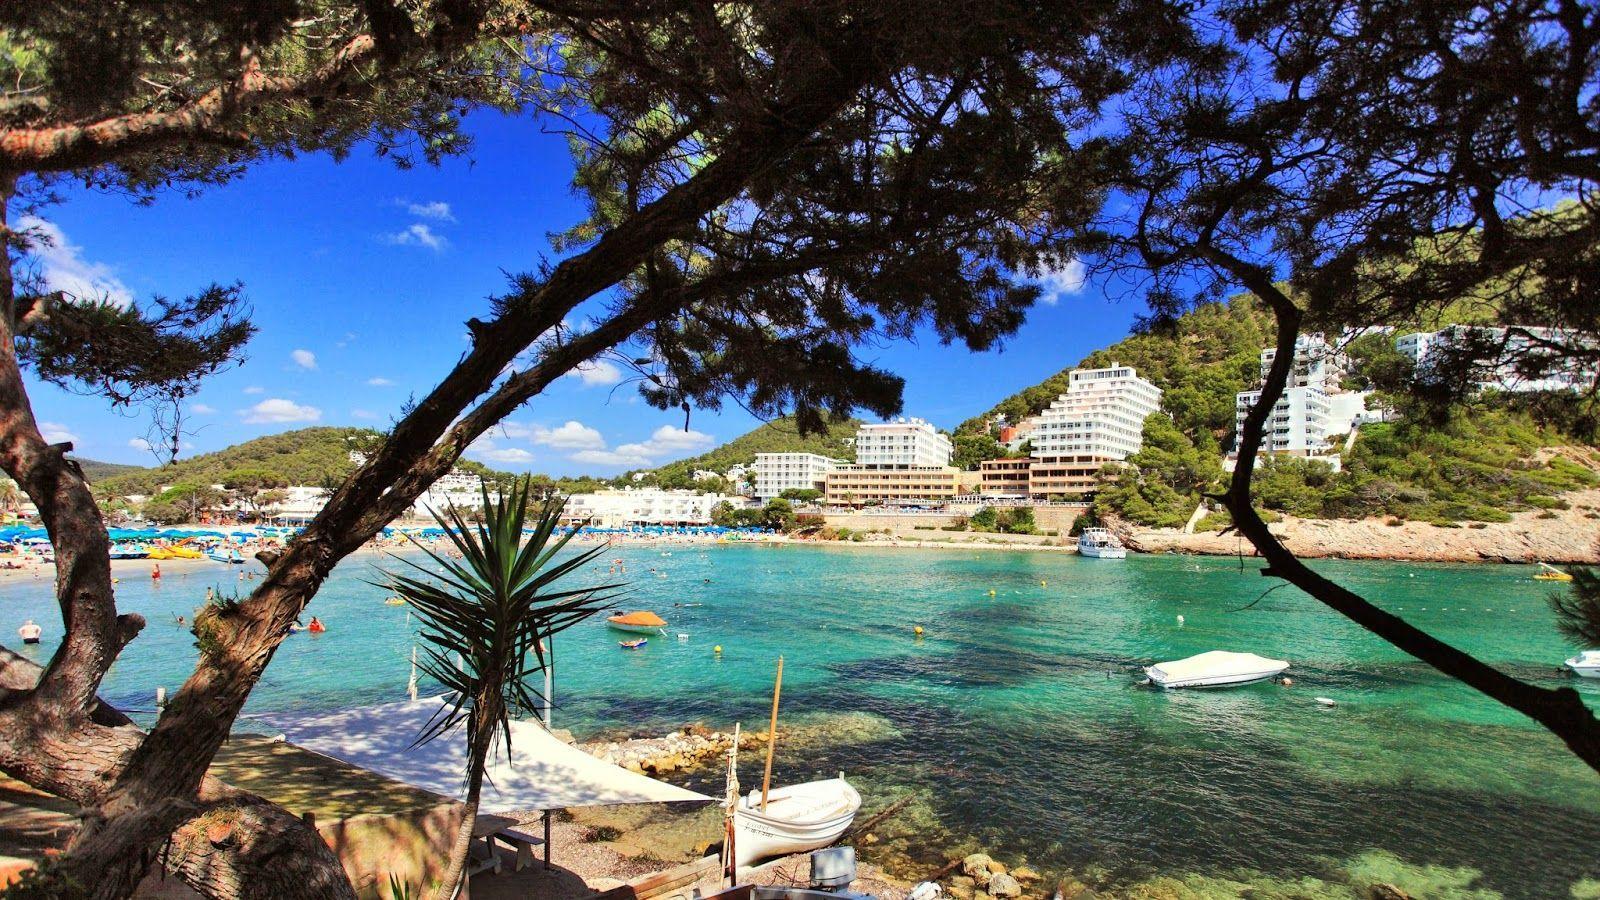 Travel My Way: Spain > Balearic Islands > Ibiza > Cala Llonga